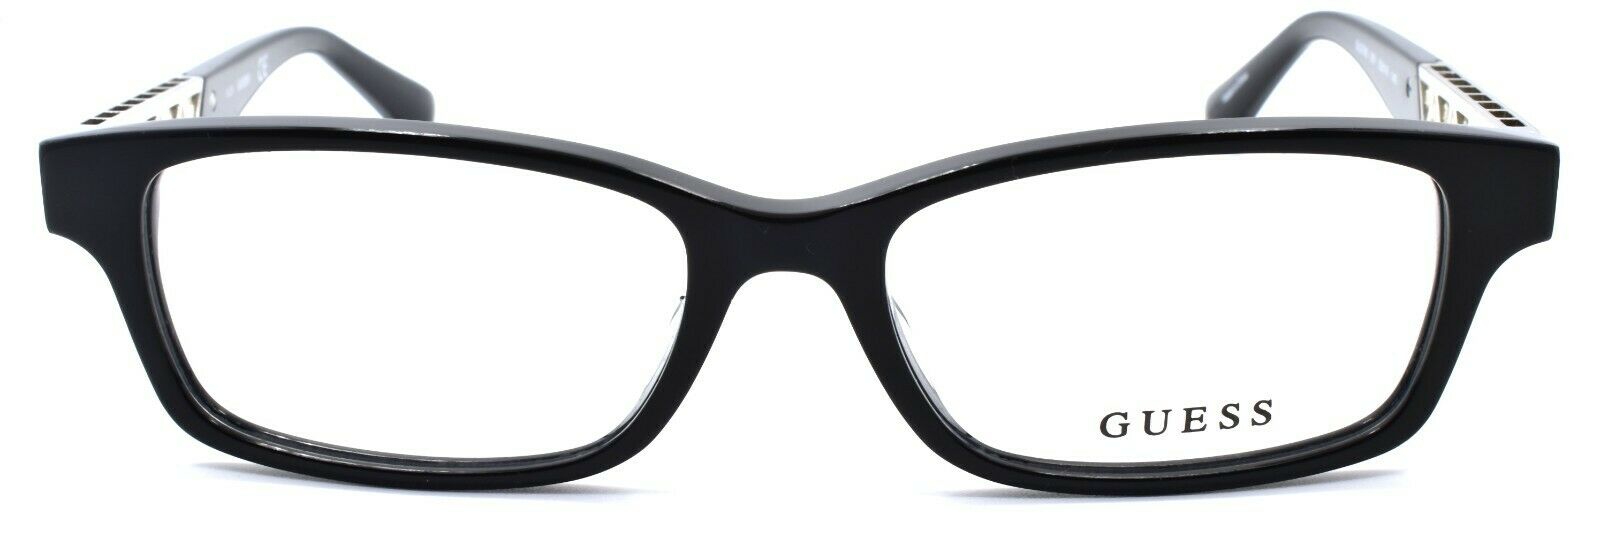 2-GUESS GU2785 001 Women's Eyeglasses Frames 54-16-140 Shiny Black-889214145826-IKSpecs